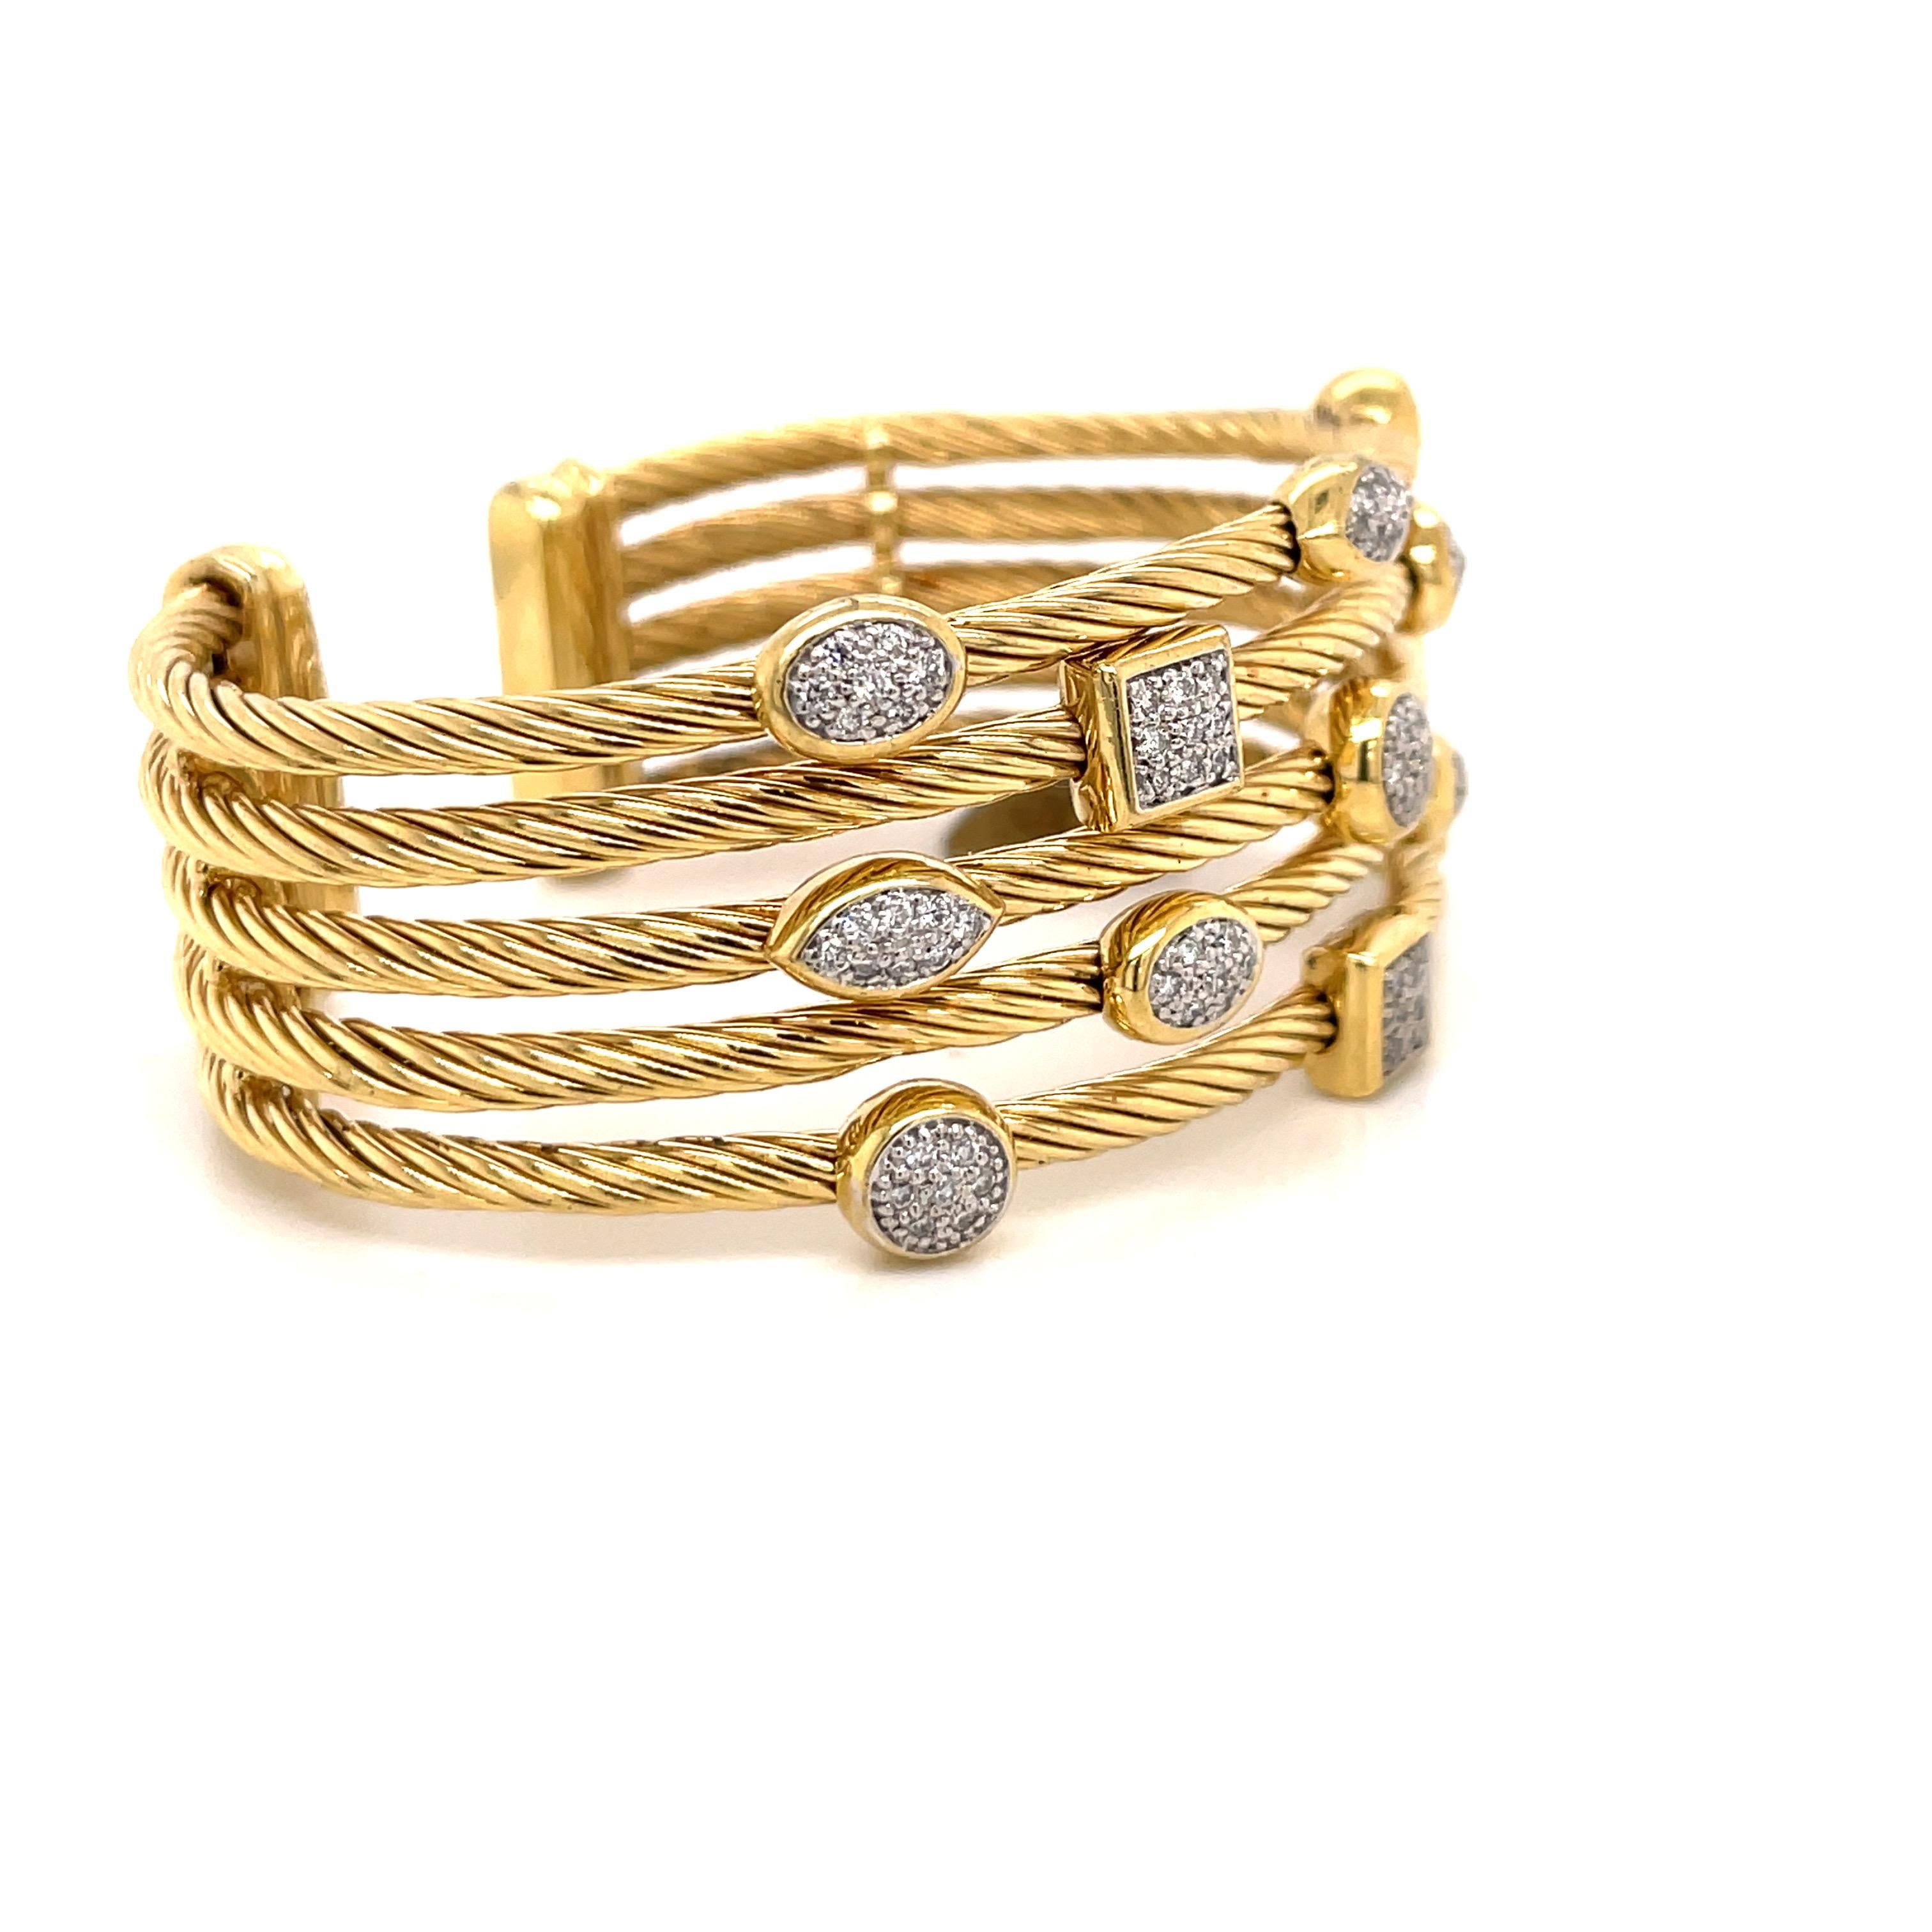 Contemporary David Yurman Confetti Collection Diamond Cuff Bracelet 18 Karat Yellow Gold